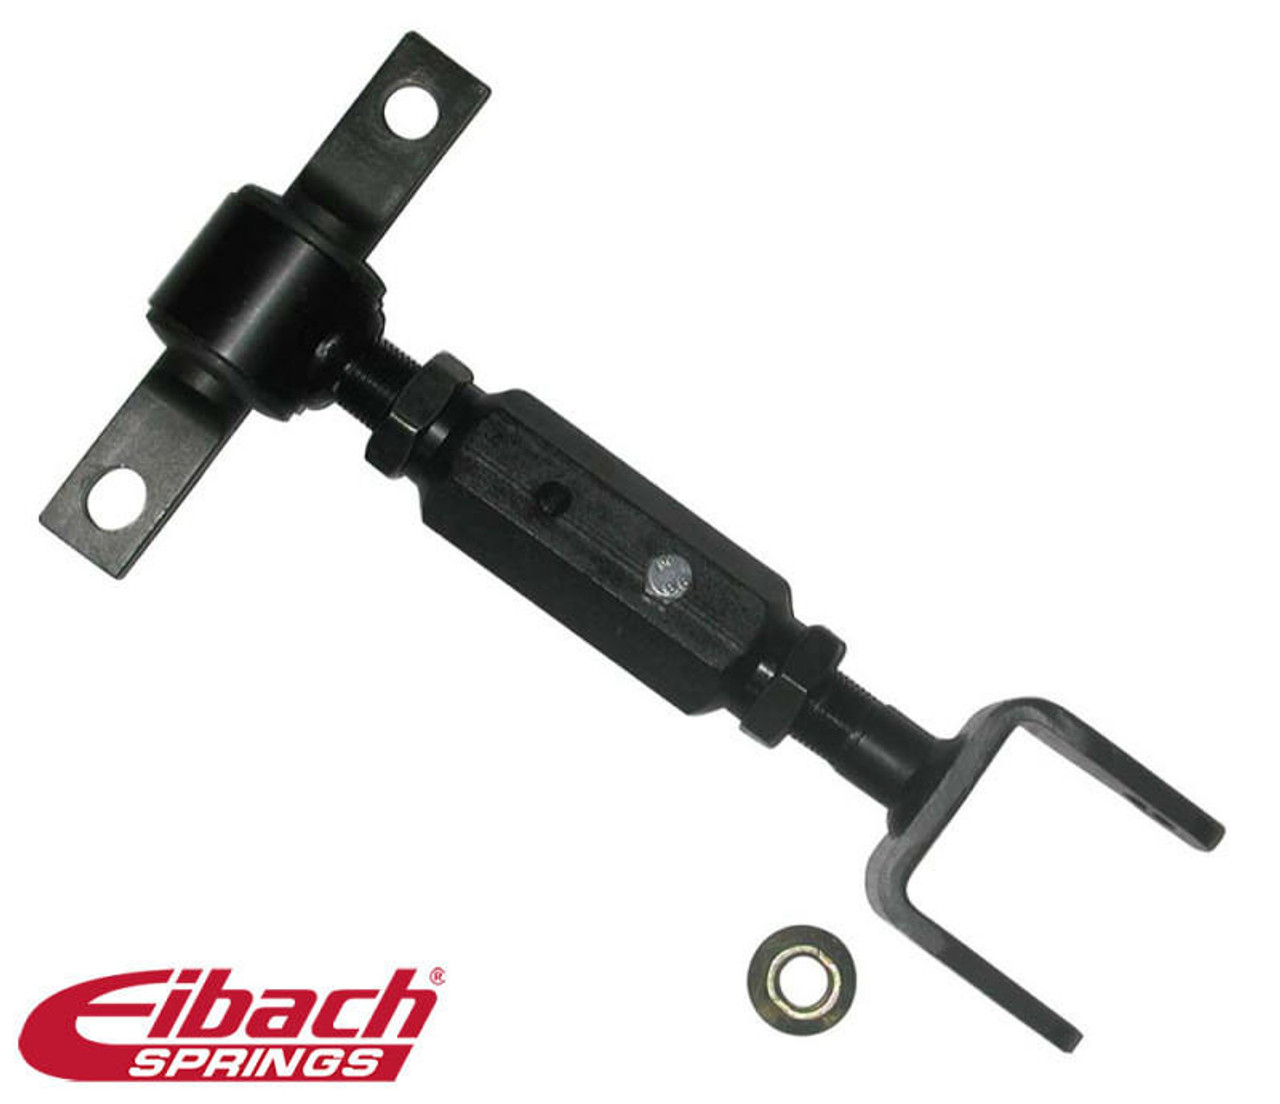  Eibach Pro-Alignment Rear Camber Kit for 02-04 Acura RSX / 01-05 Honda Civic / 02-05 Honda Civic Si - 5.67230K 